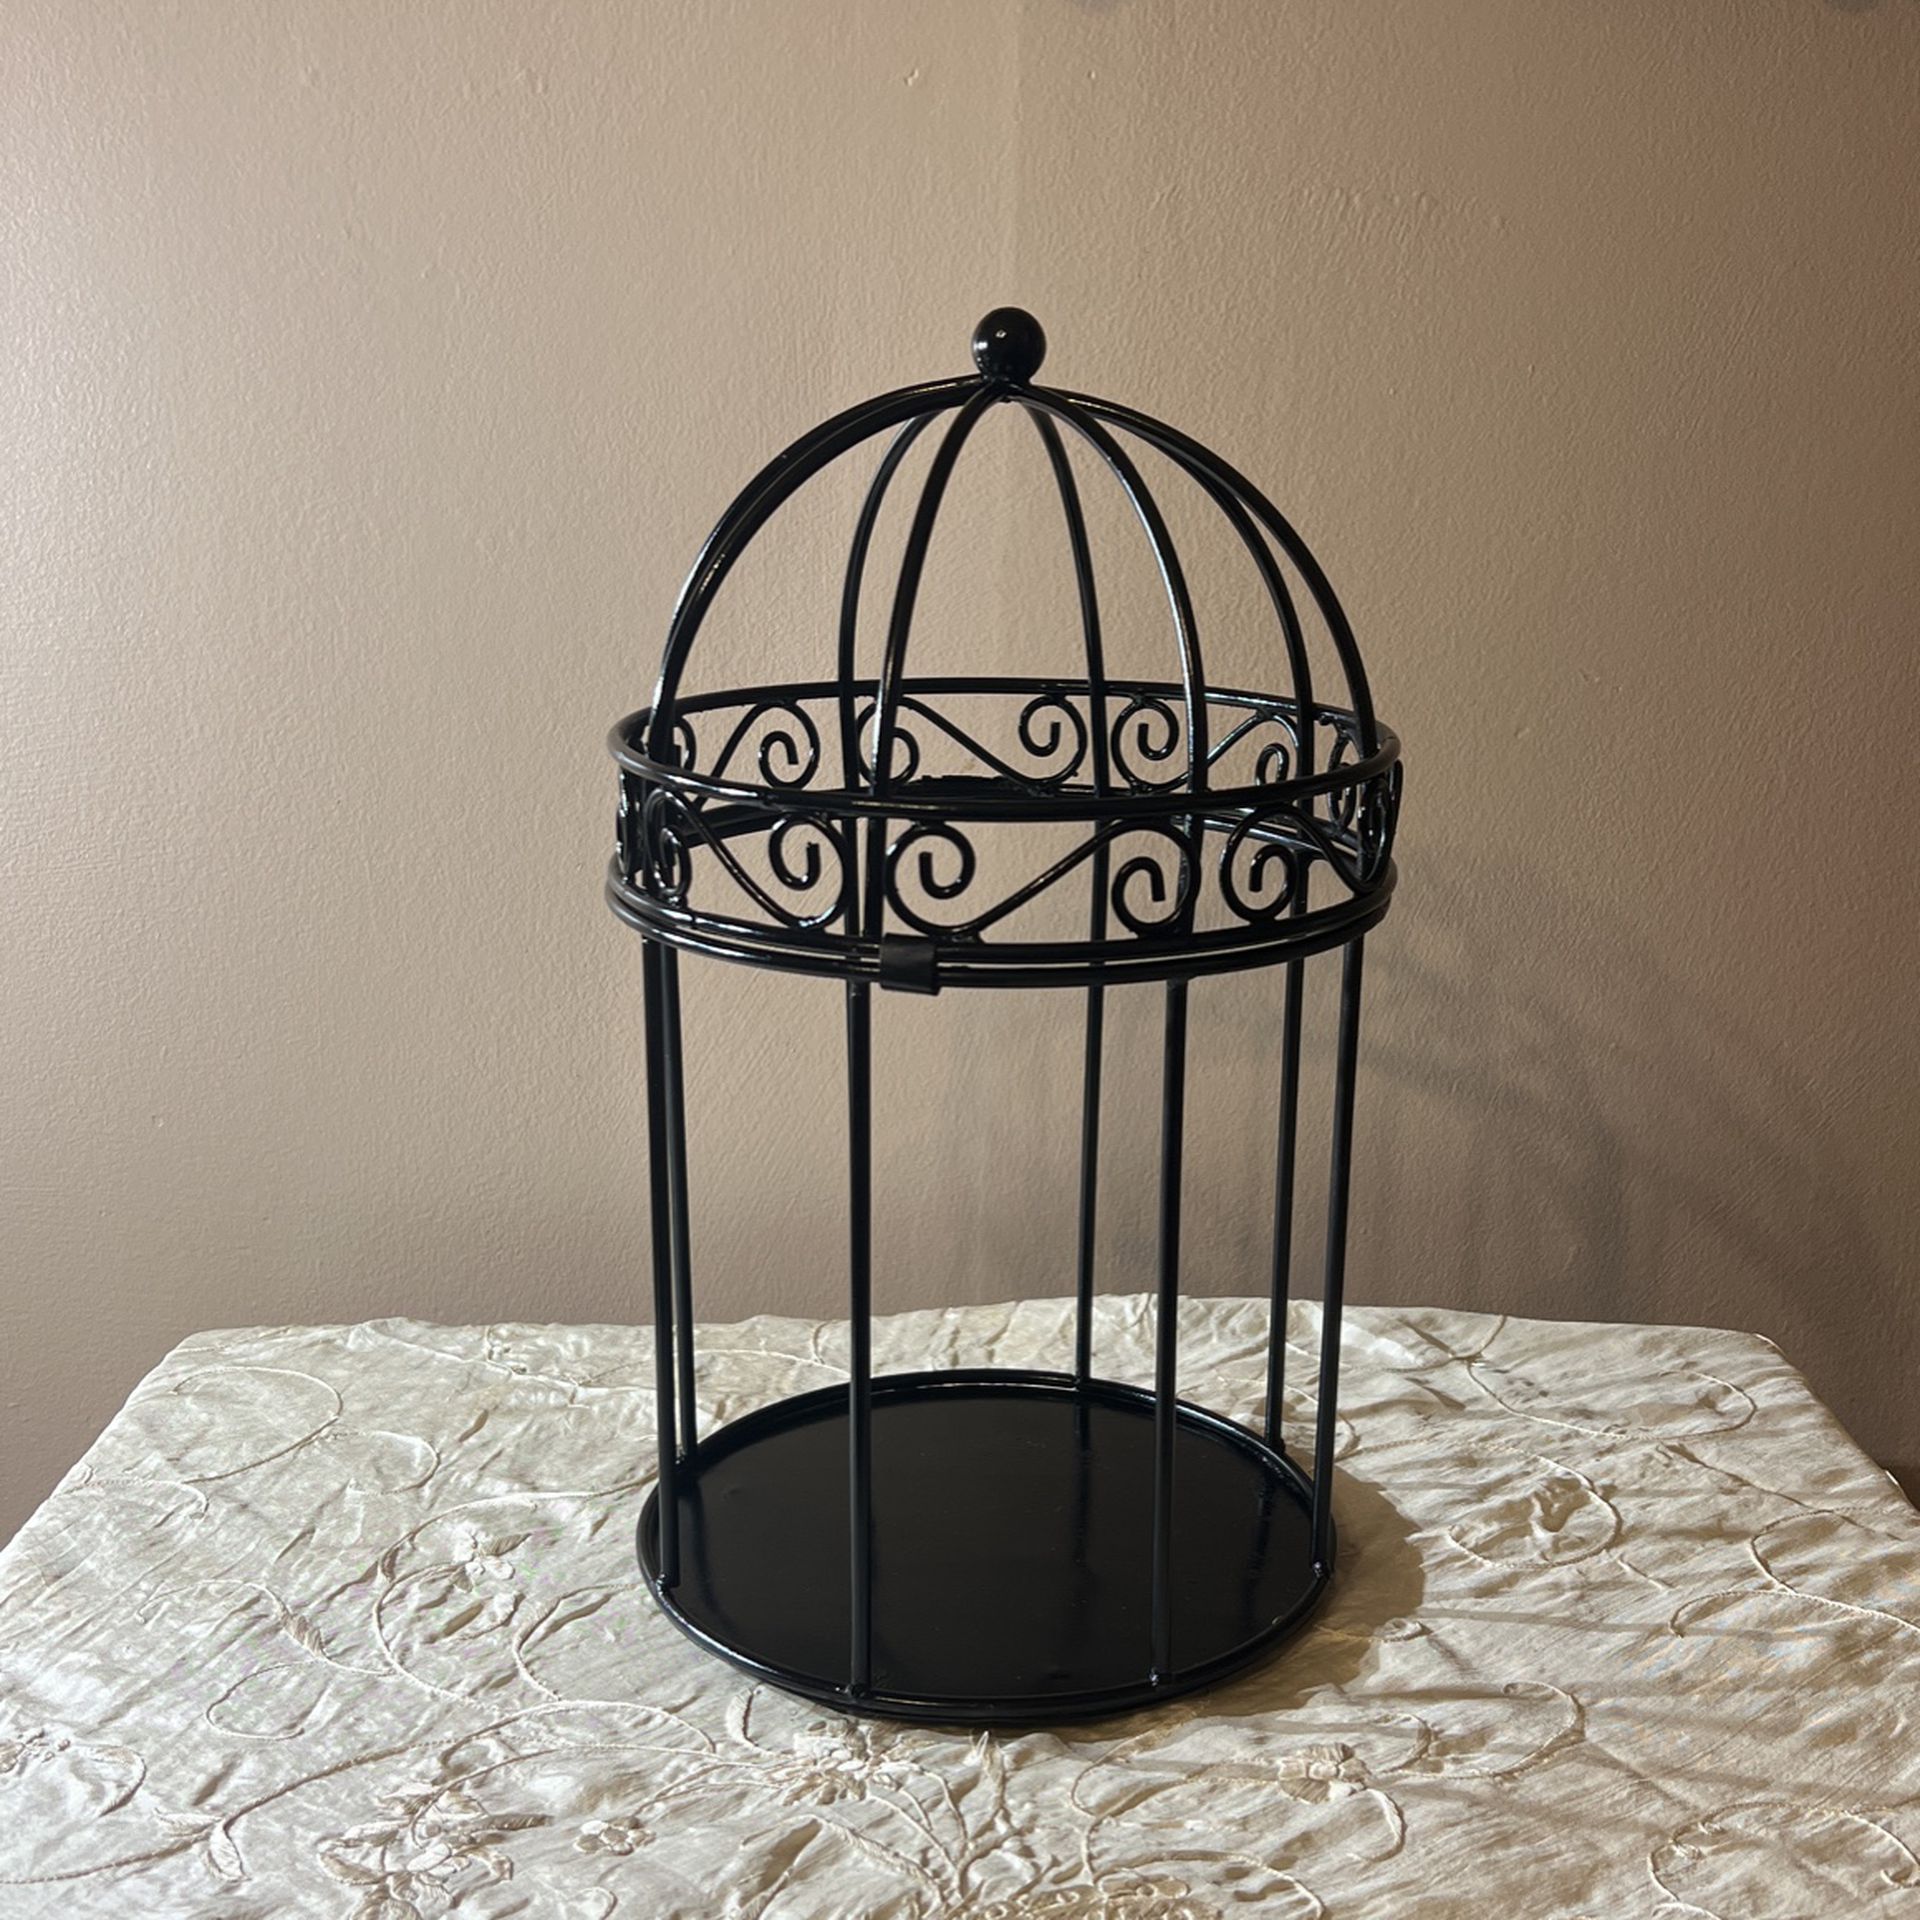 Metal Bird Cage Decor